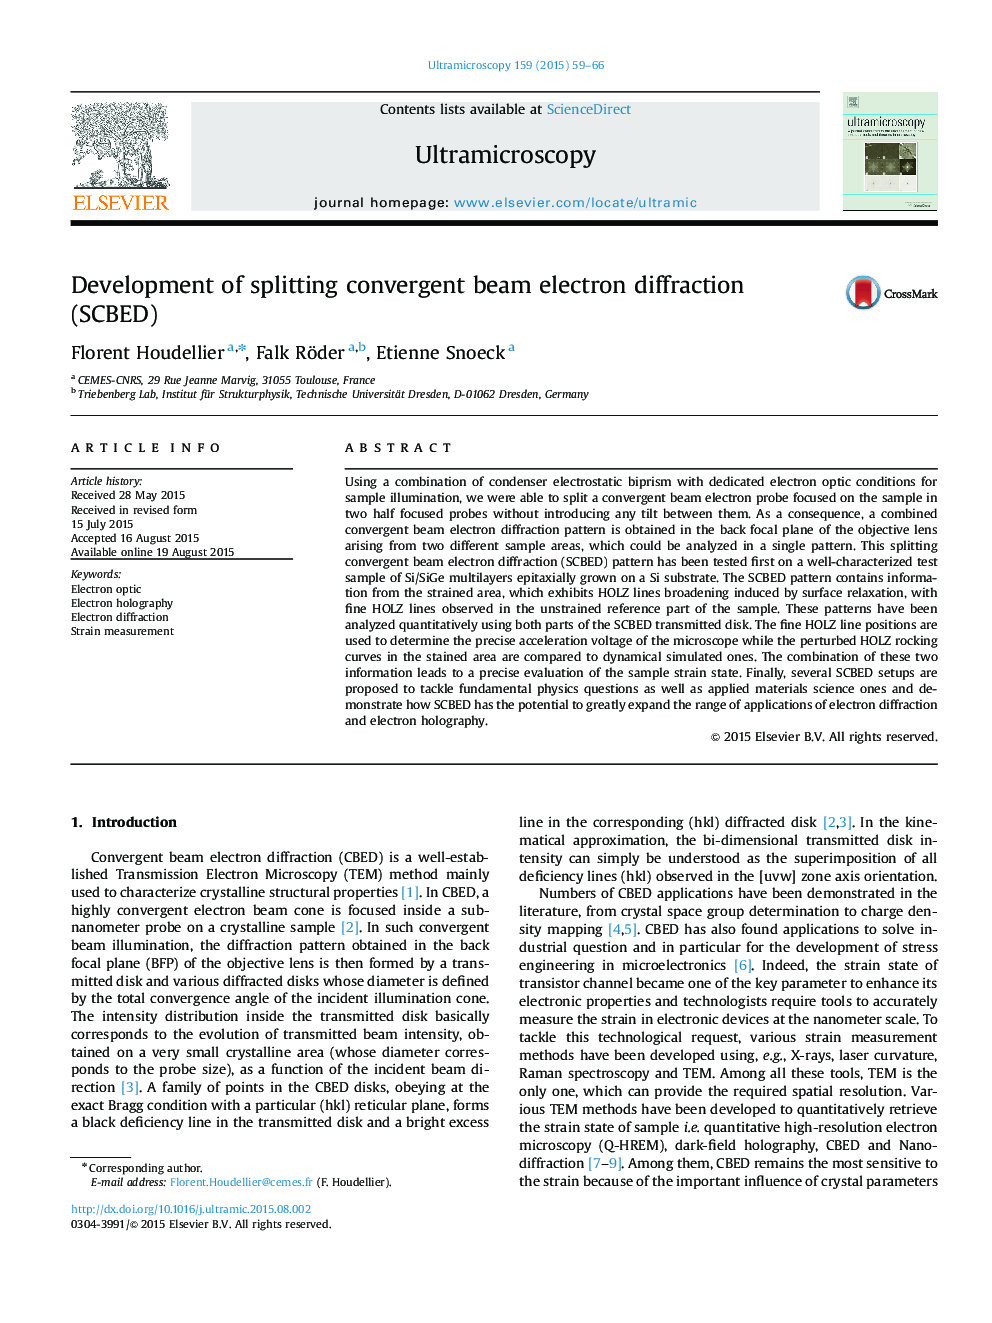 Development of splitting convergent beam electron diffraction (SCBED)